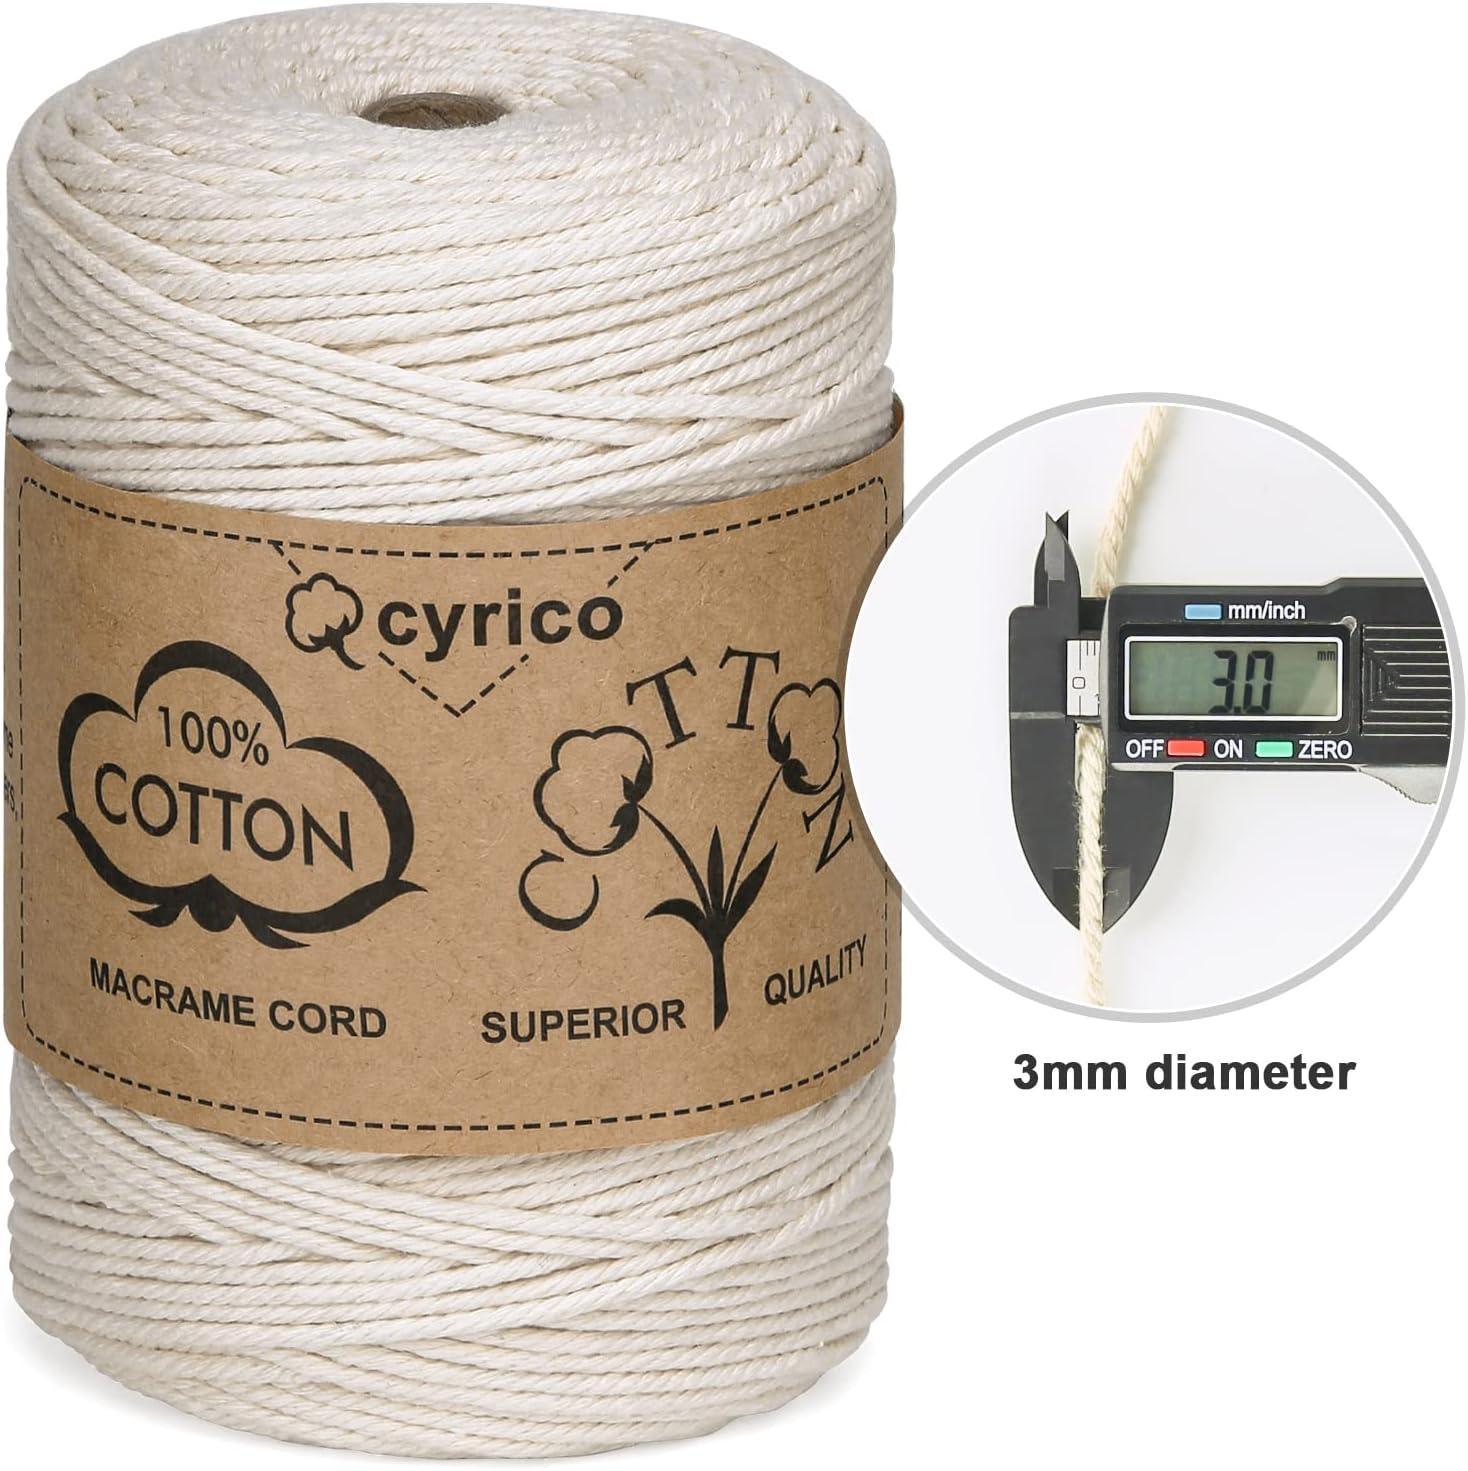 3mm 4mm 5mm Macrame Cord 100% Cotton Cord Big Roll Macrame Rope 4